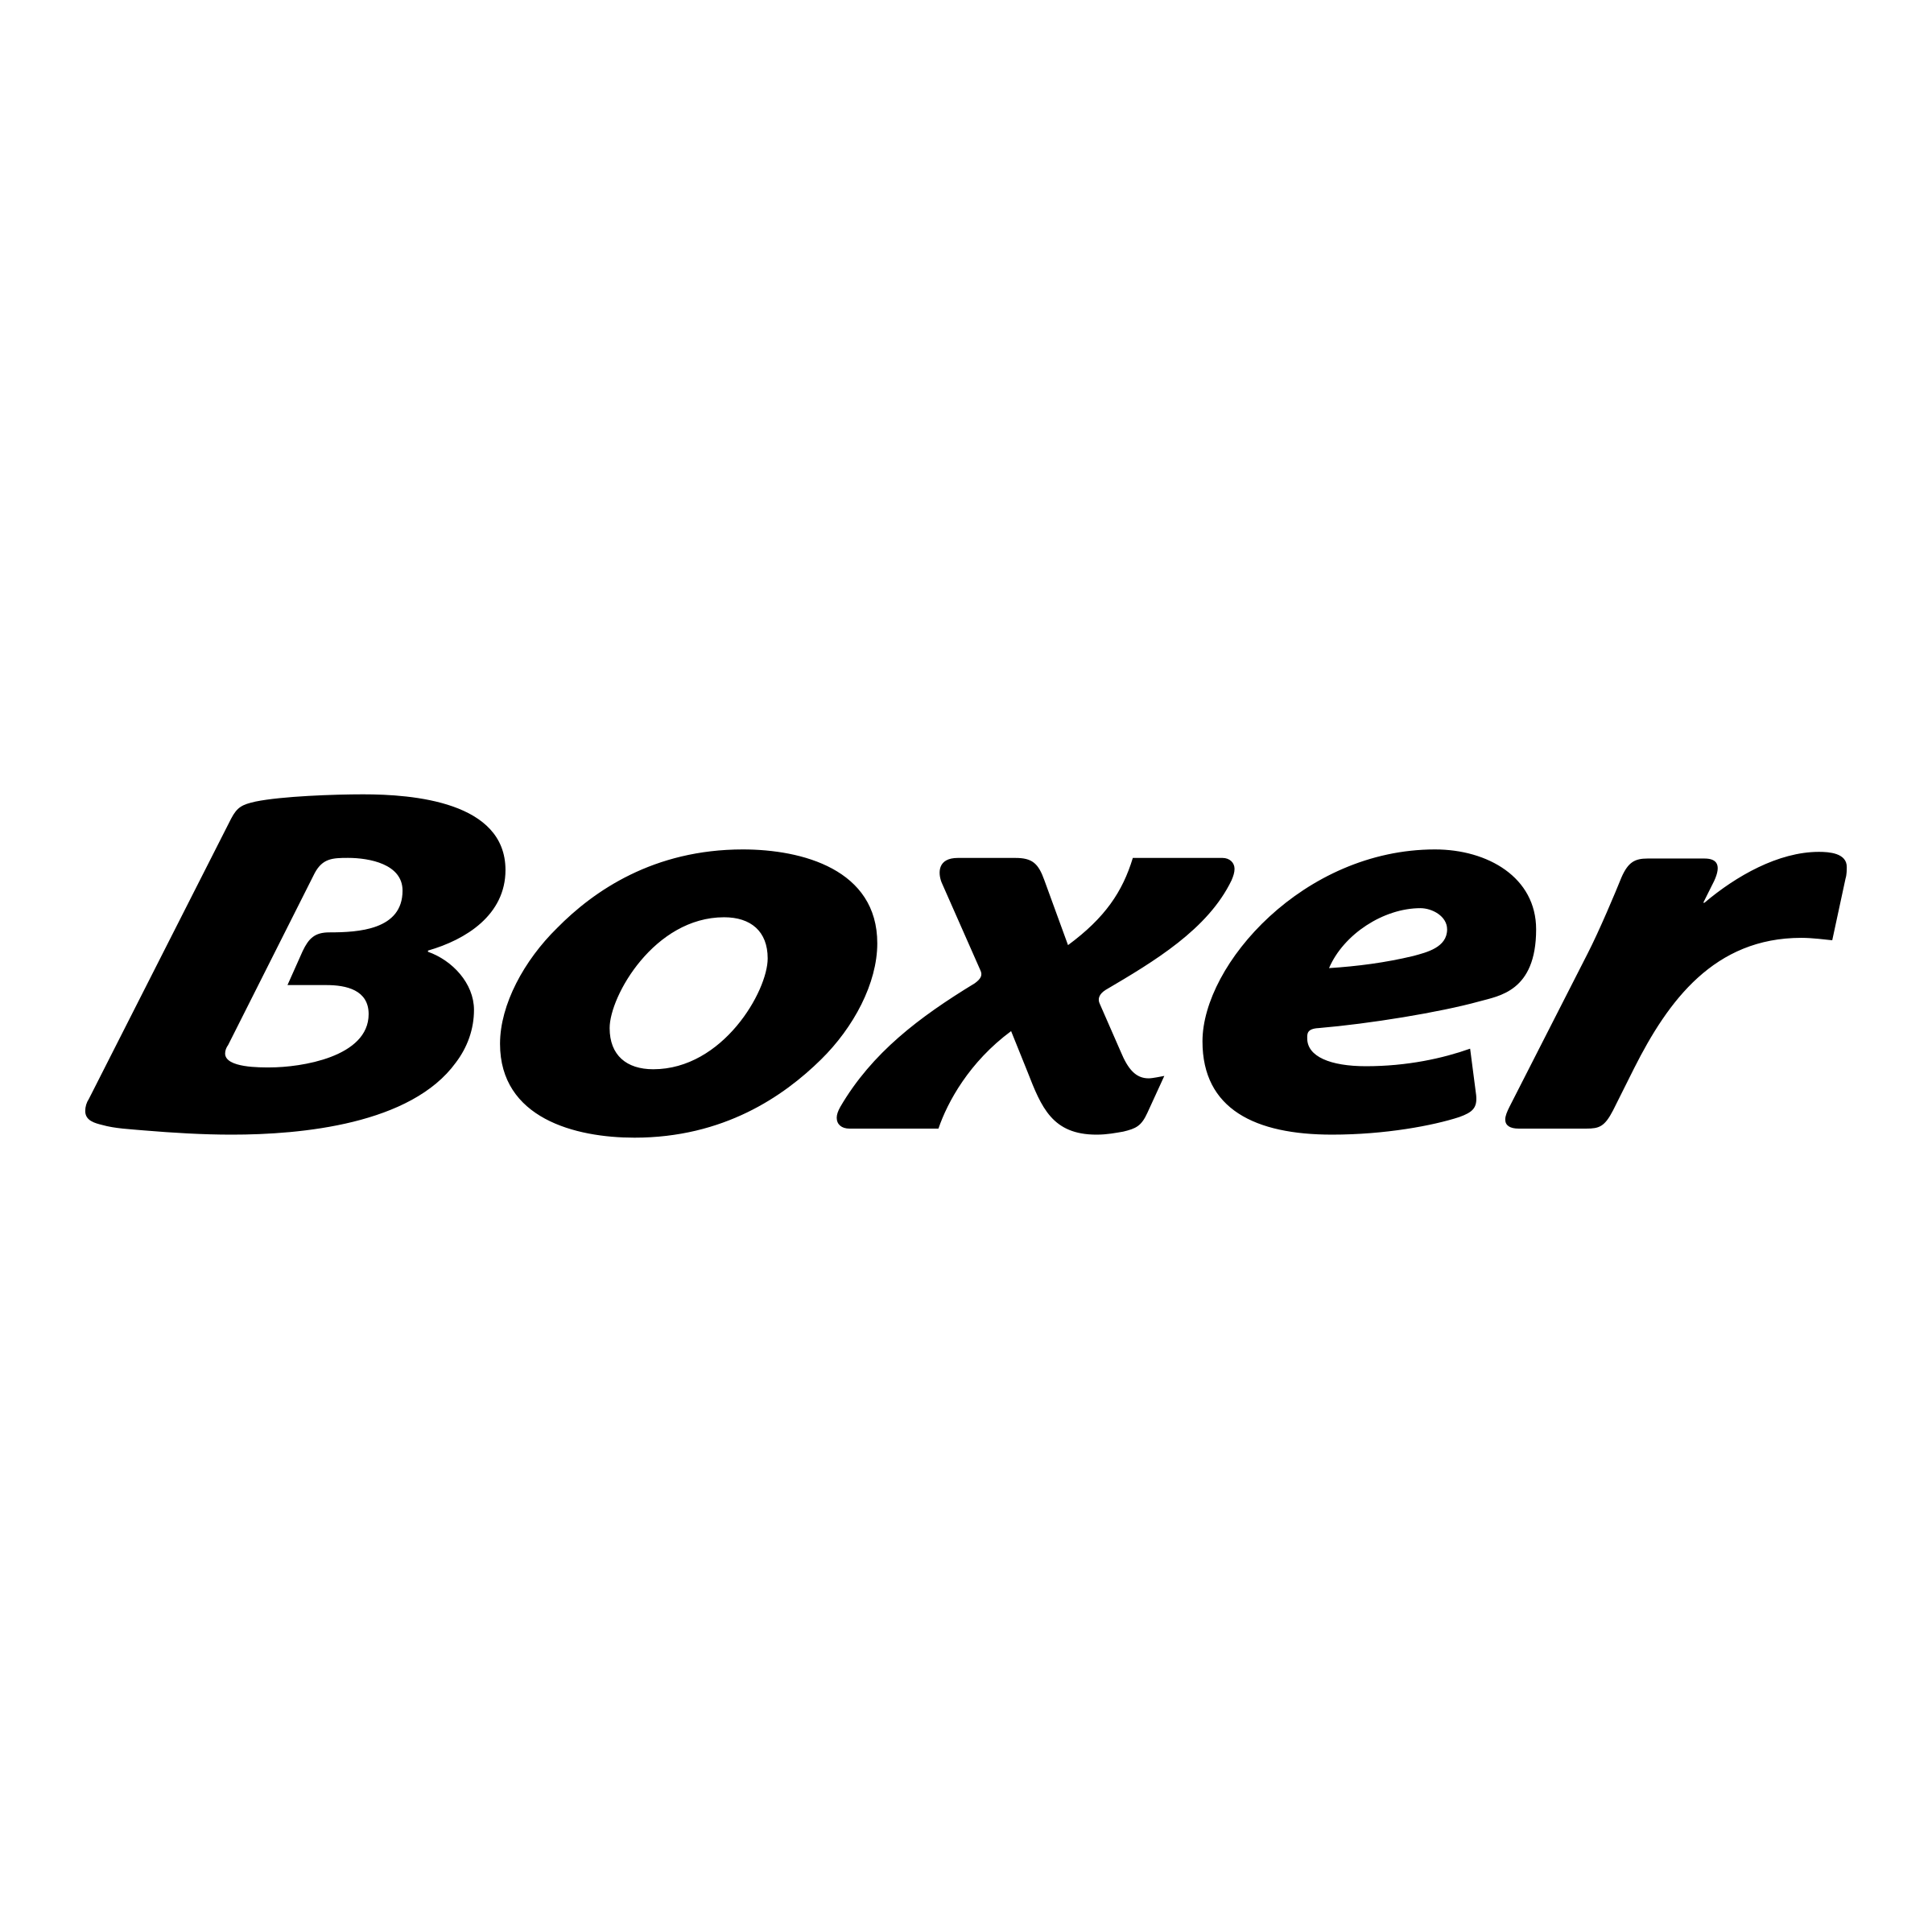 Boxer Logo - Peugeot Boxer Logo PNG Transparent & SVG Vector